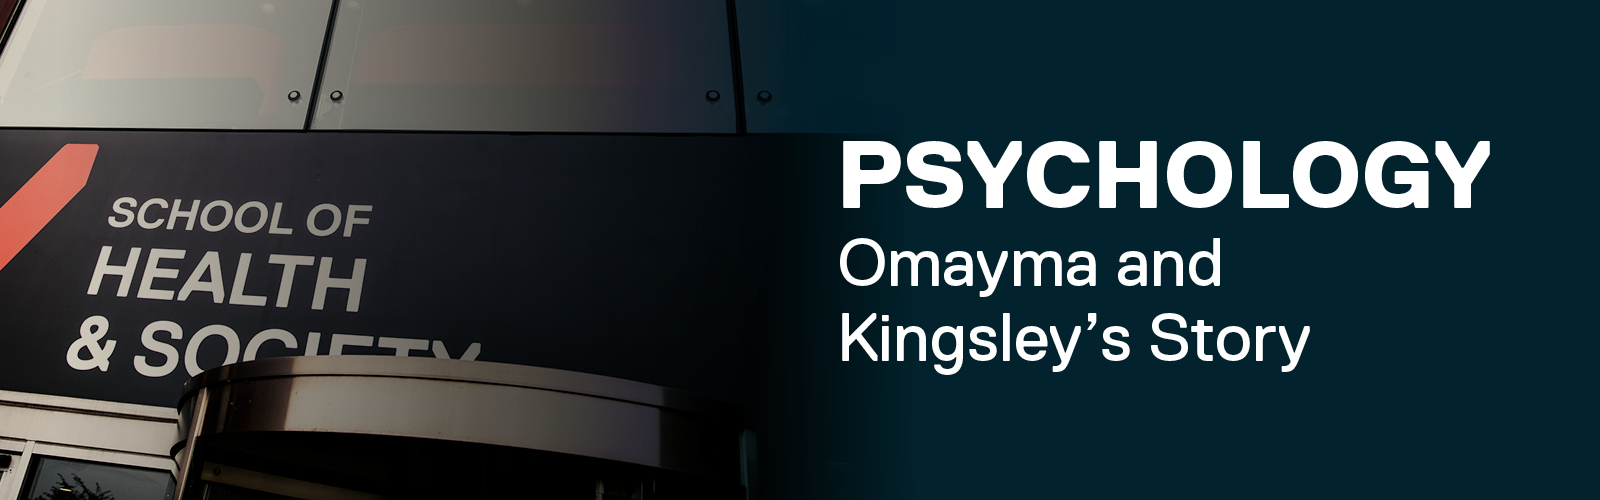 Psychology Blog Image - Omayma and Kingsley's story